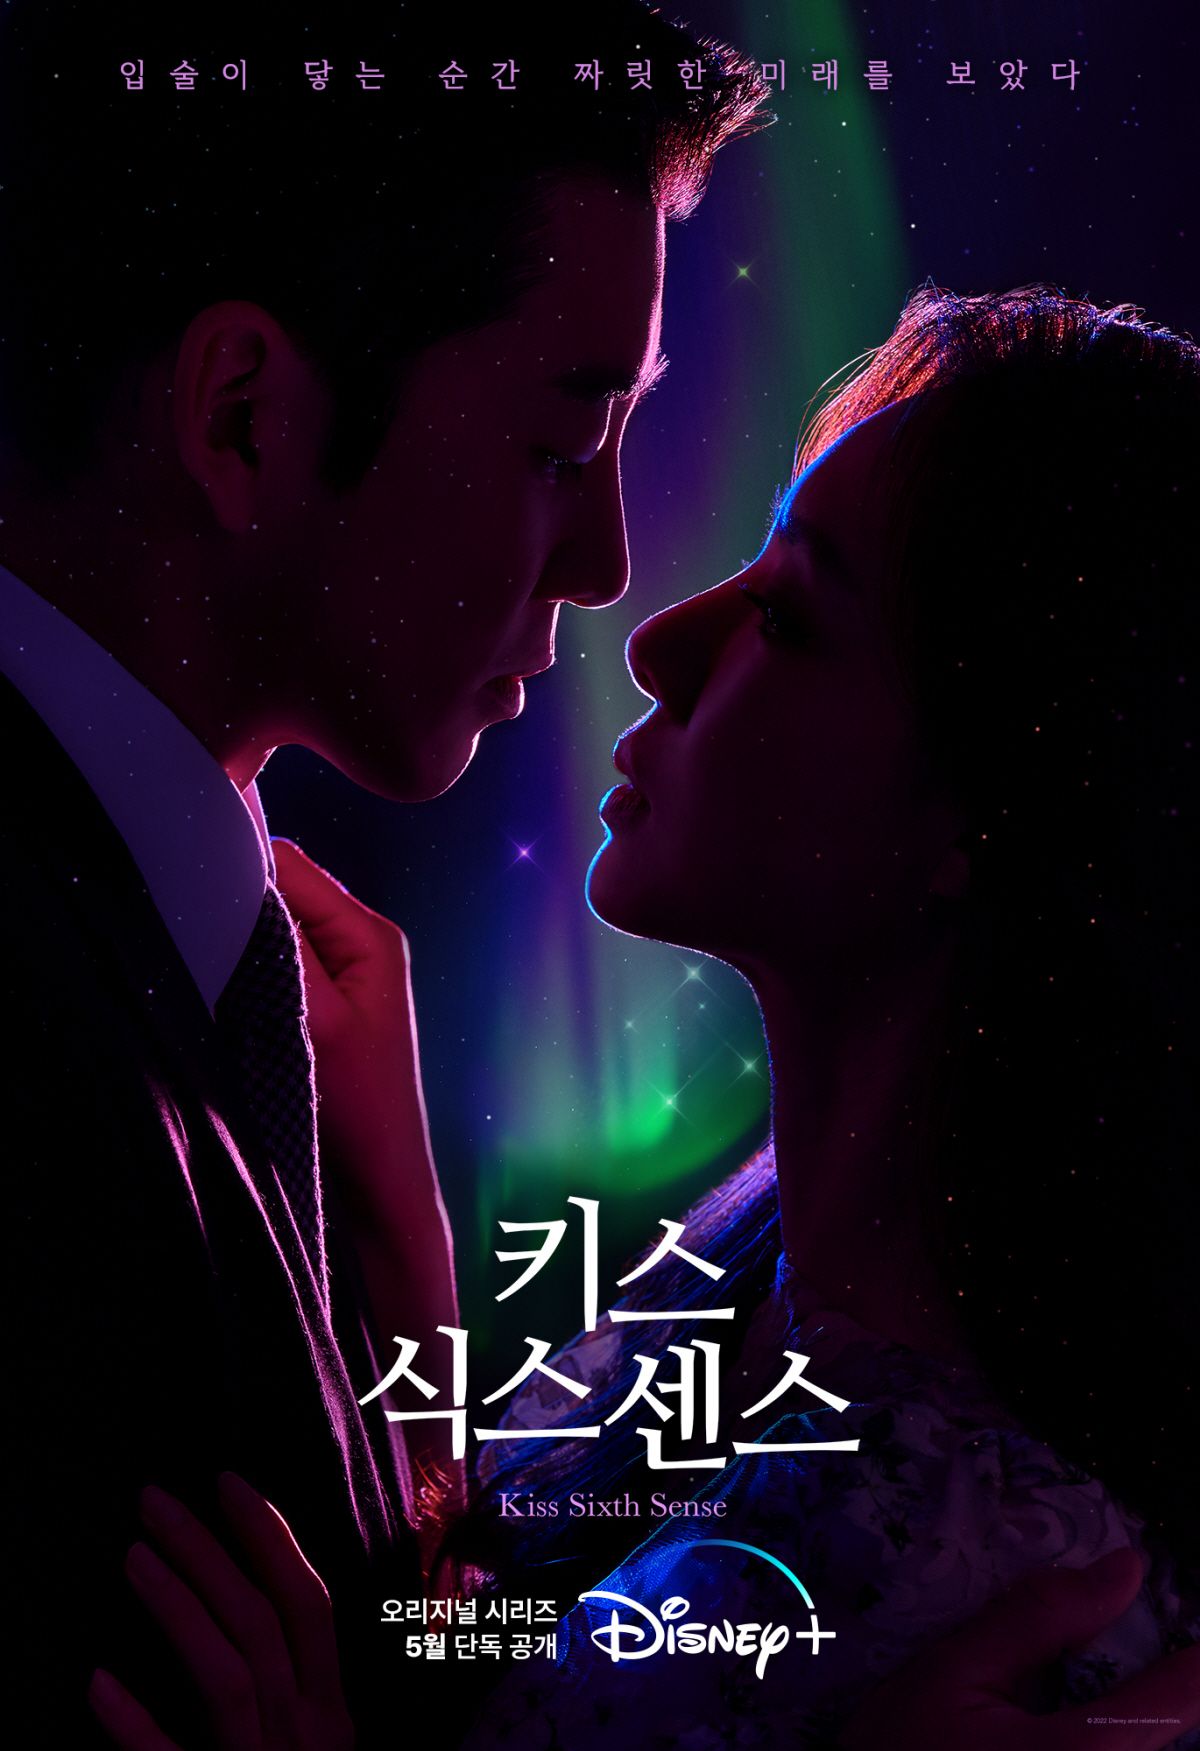 Seo Ji-hye sees her future with Yoon Kye-sang in Kiss Sixth Sense